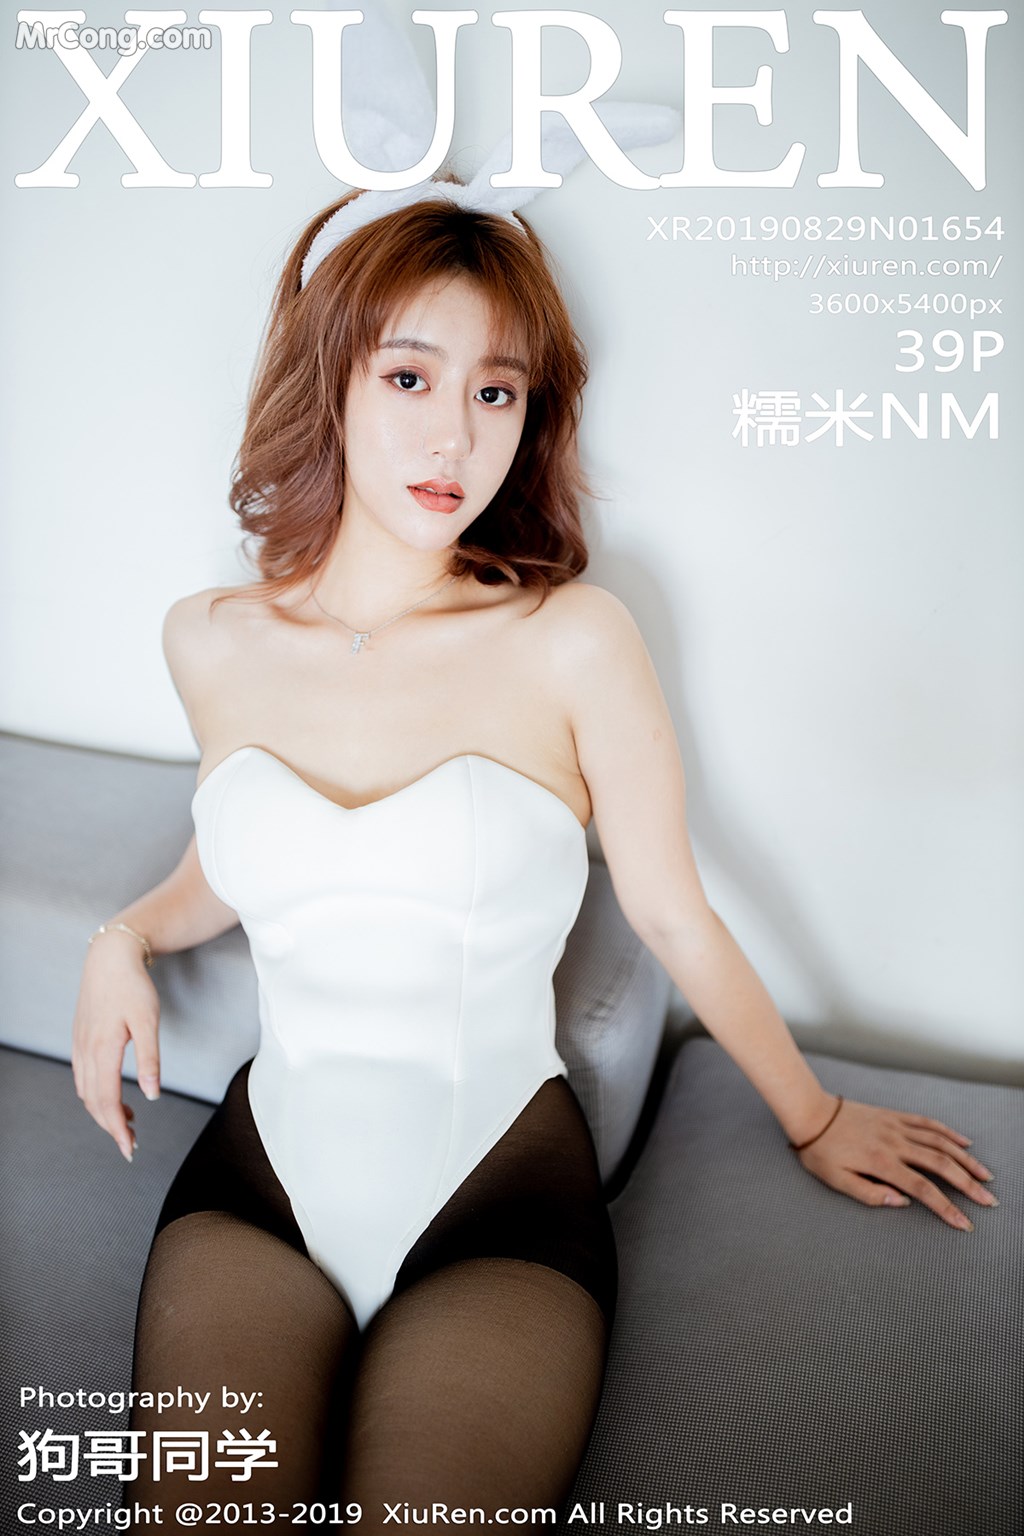 [XIUREN] No.1654 糯米NM Cover Photo